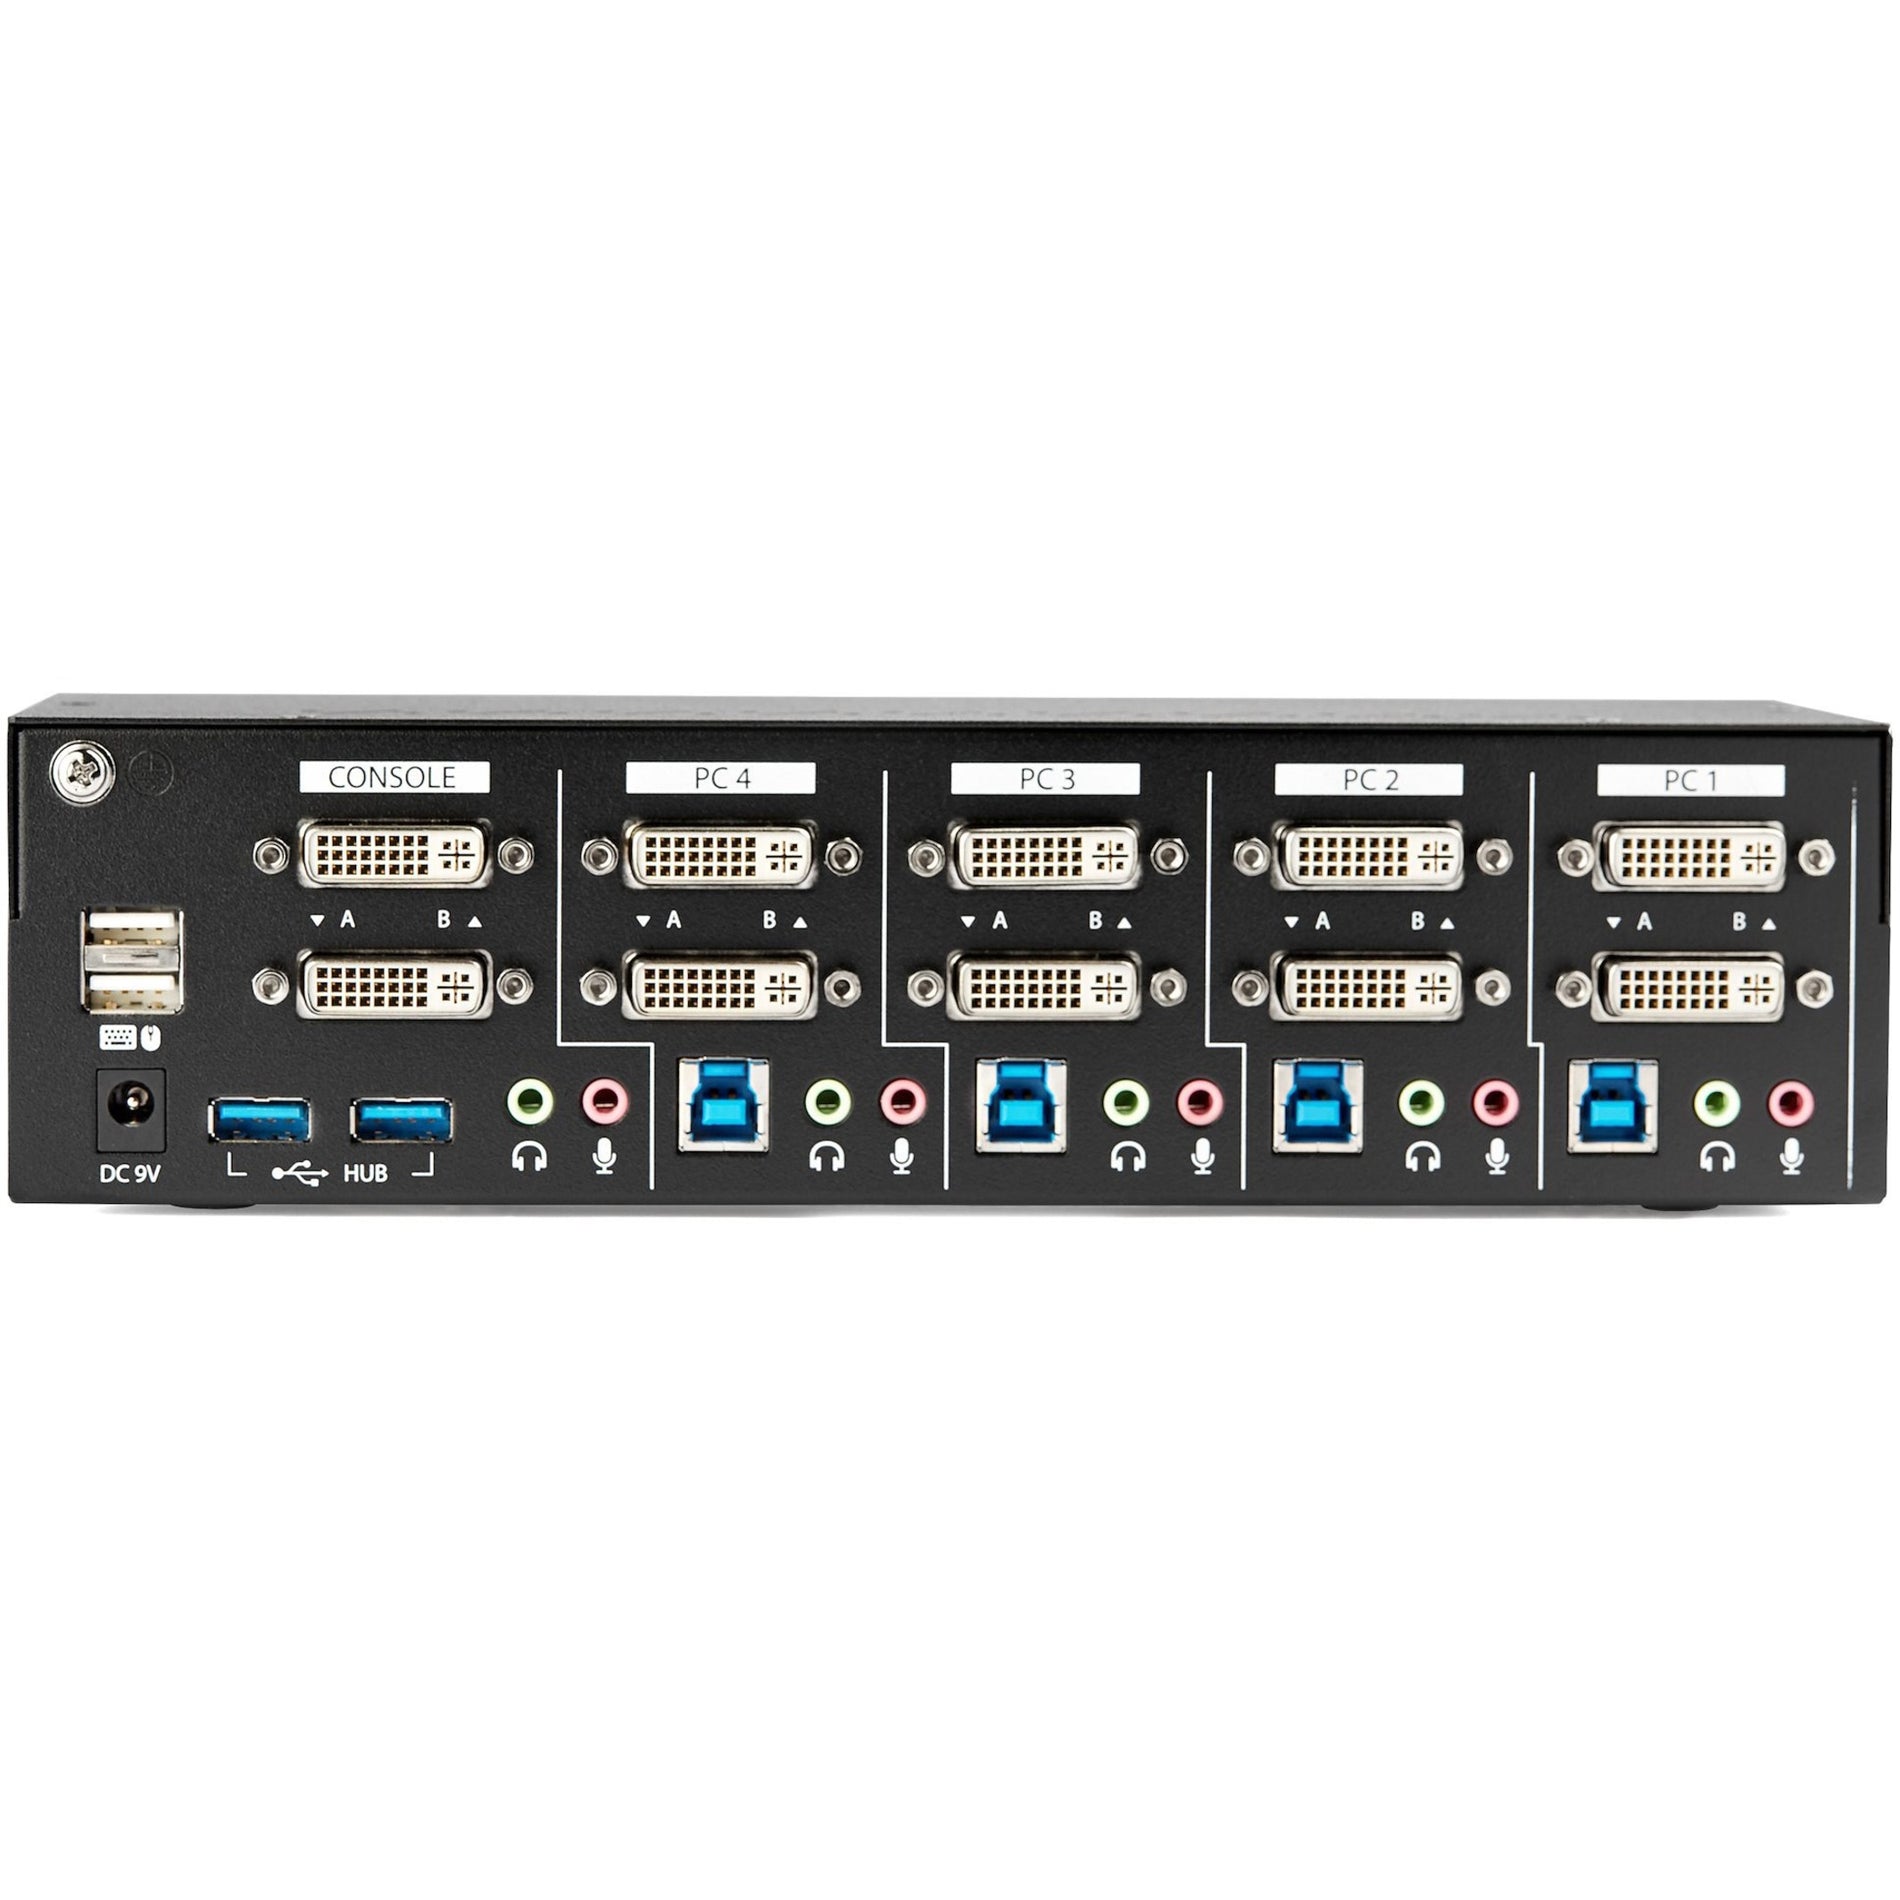 StarTech.com SV431DD2DU3A 4-Port Dual-Monitor DVI KVM Switch with USB 3.0 Hub, TAA Compliant